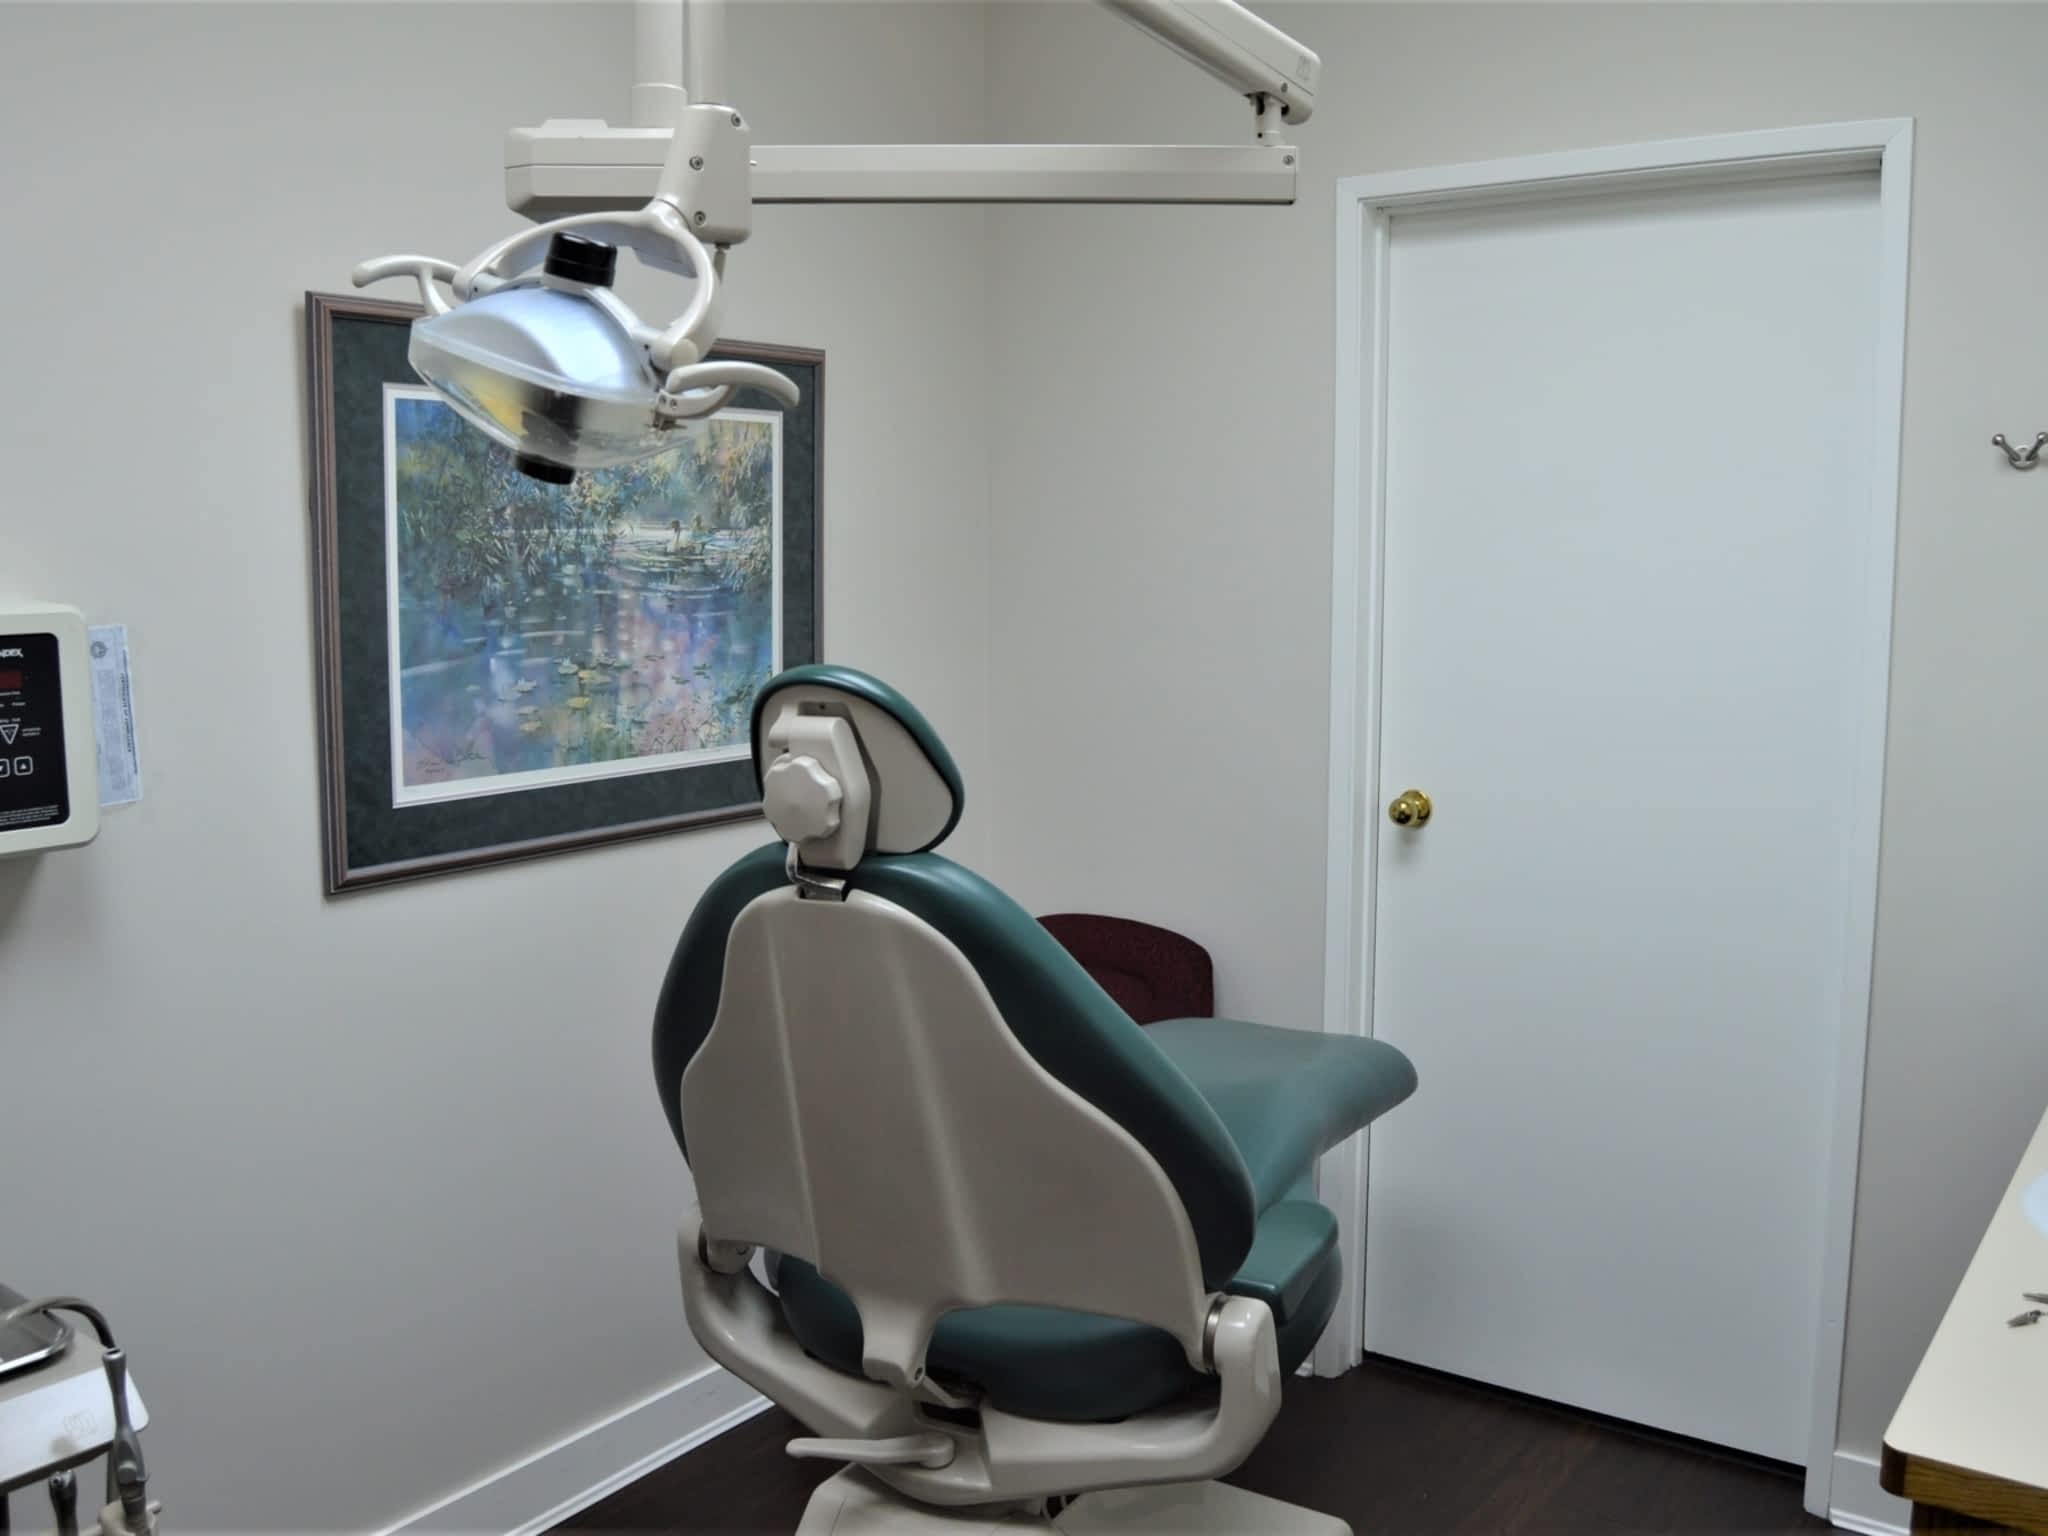 photo Lincoln Dental Center